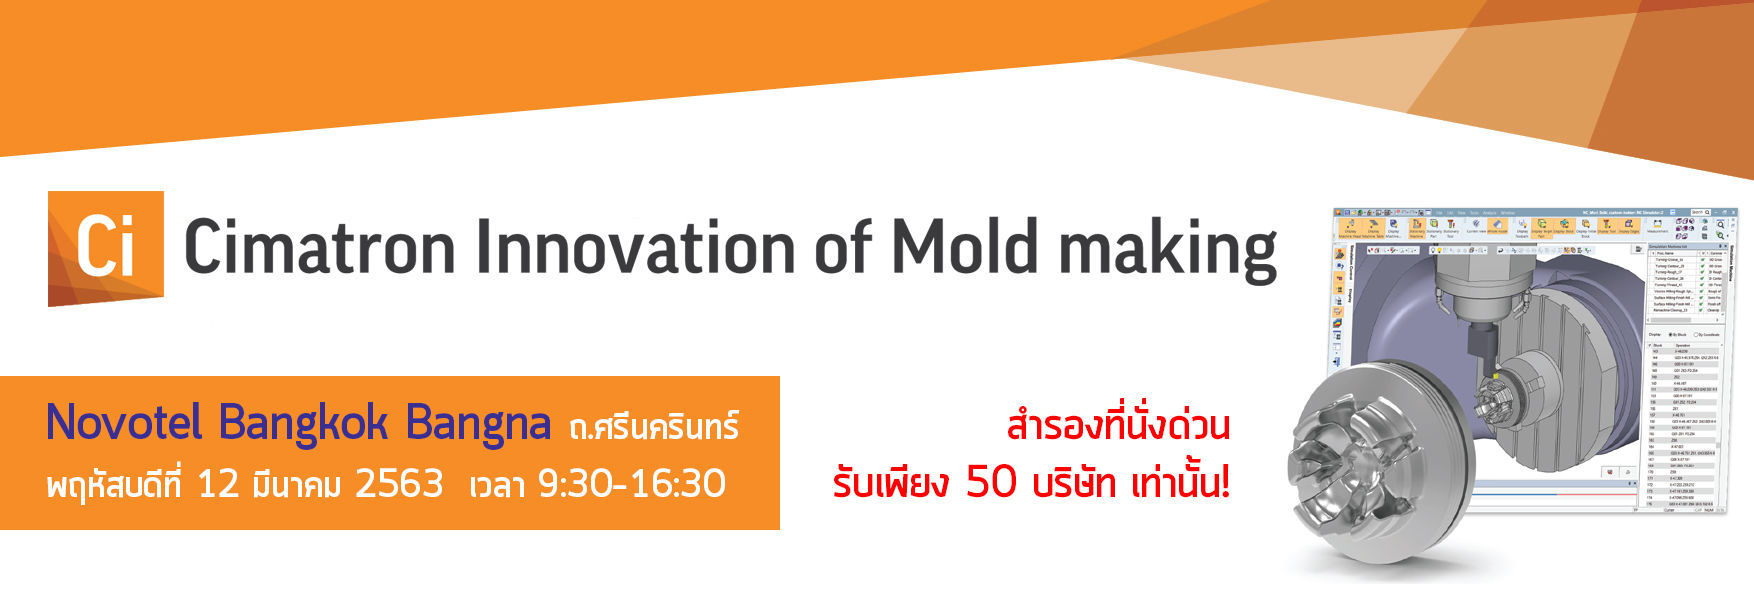 Cimatron Innovation of Mold Making